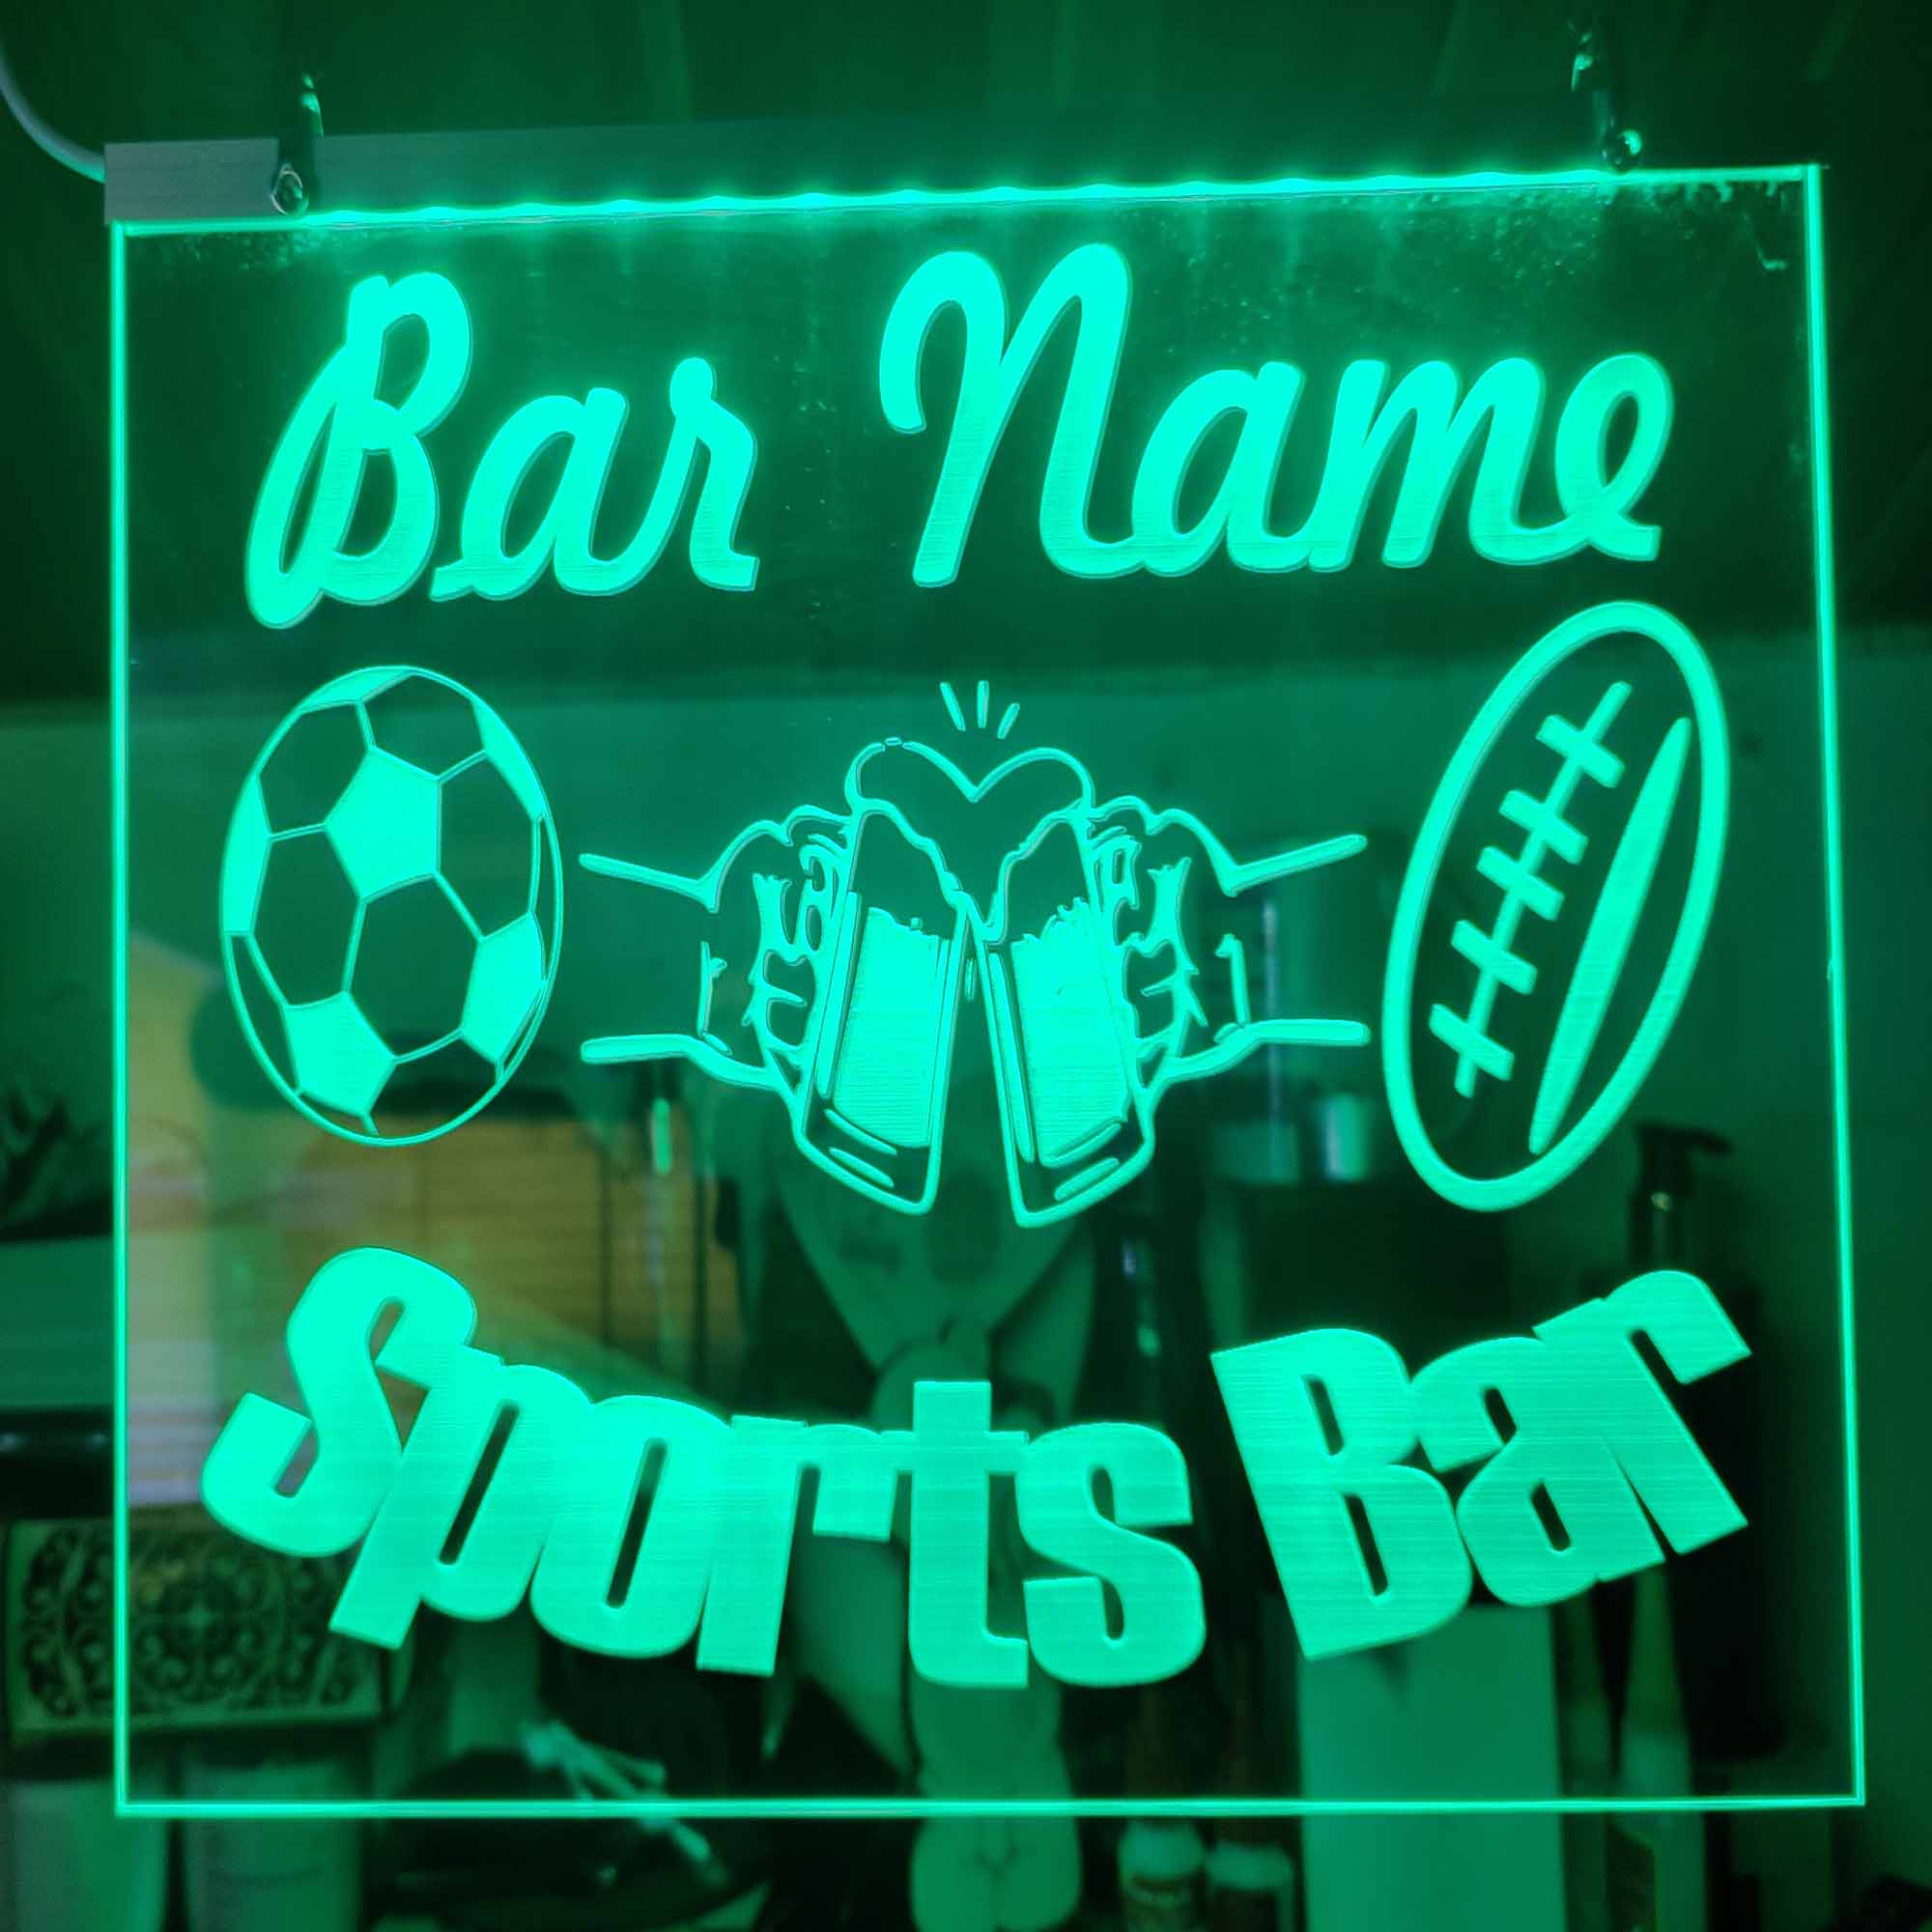 LED Sports Bar light up sign